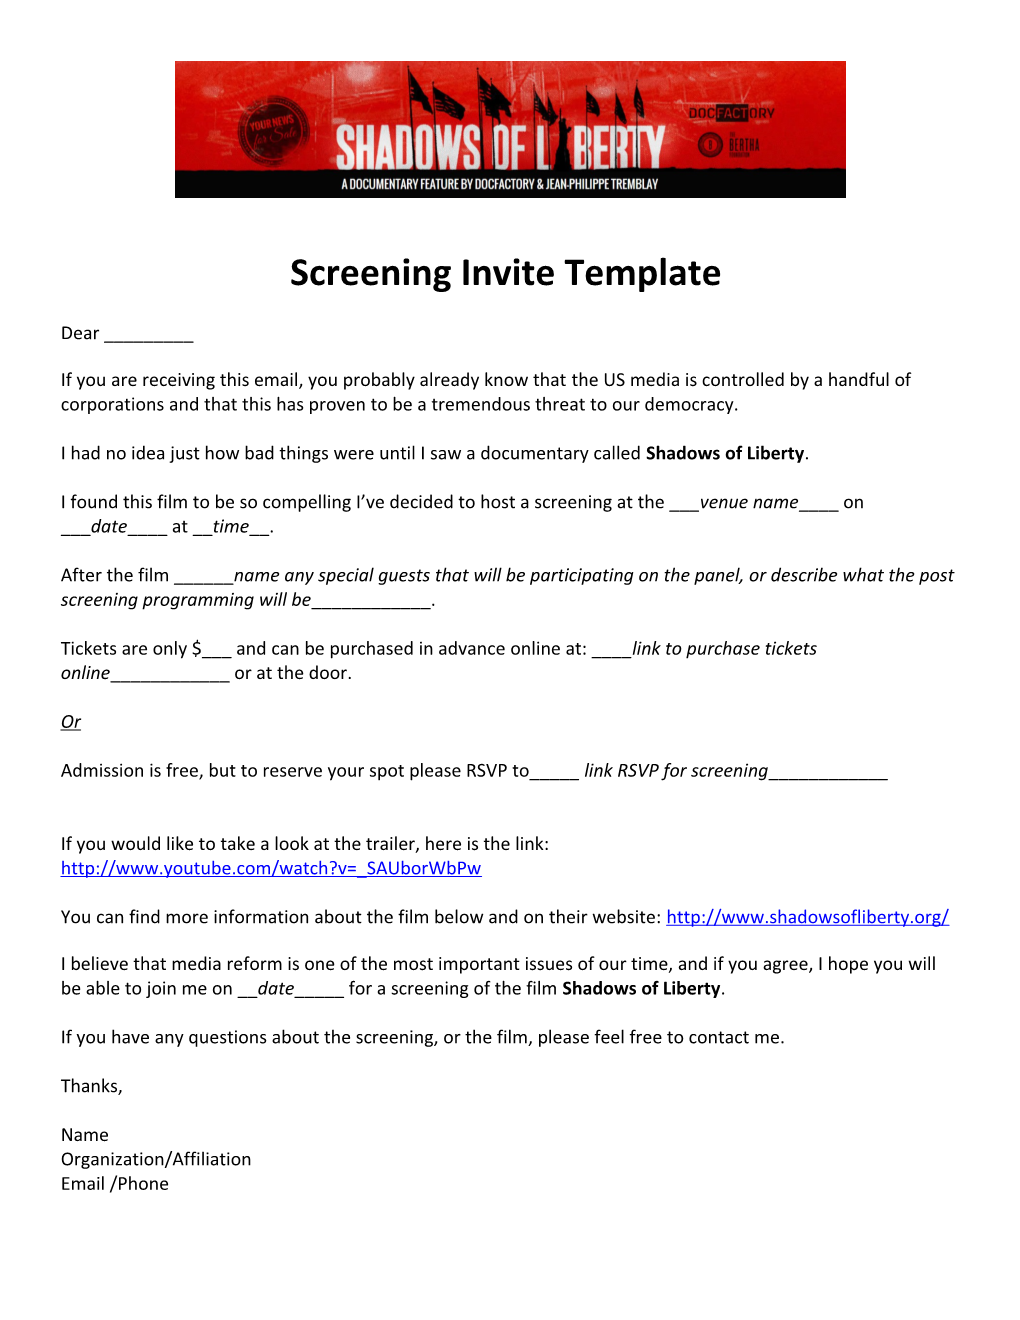 Screening Invite Template